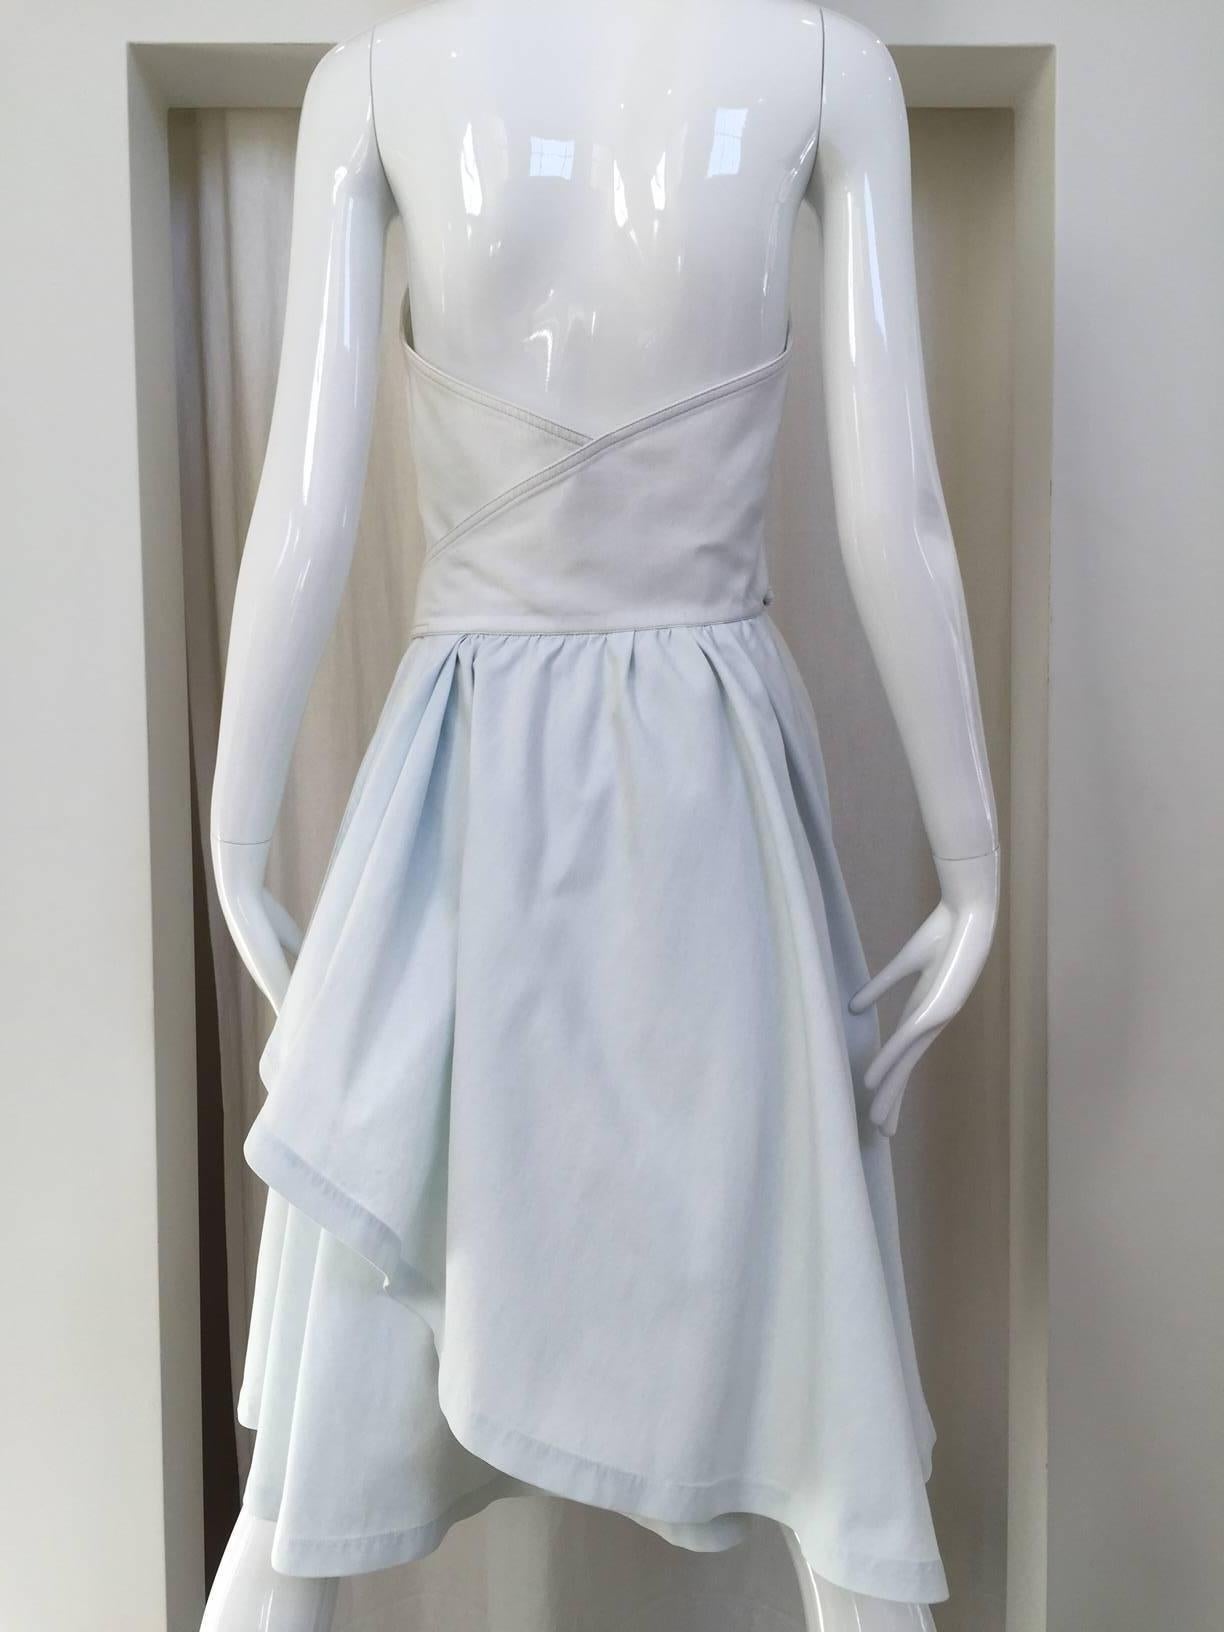 1990s Thierry Mugler light aqua blue cotton wrap dress.
Size: 4-6
Bust: 34
Waist is adjustable from 26